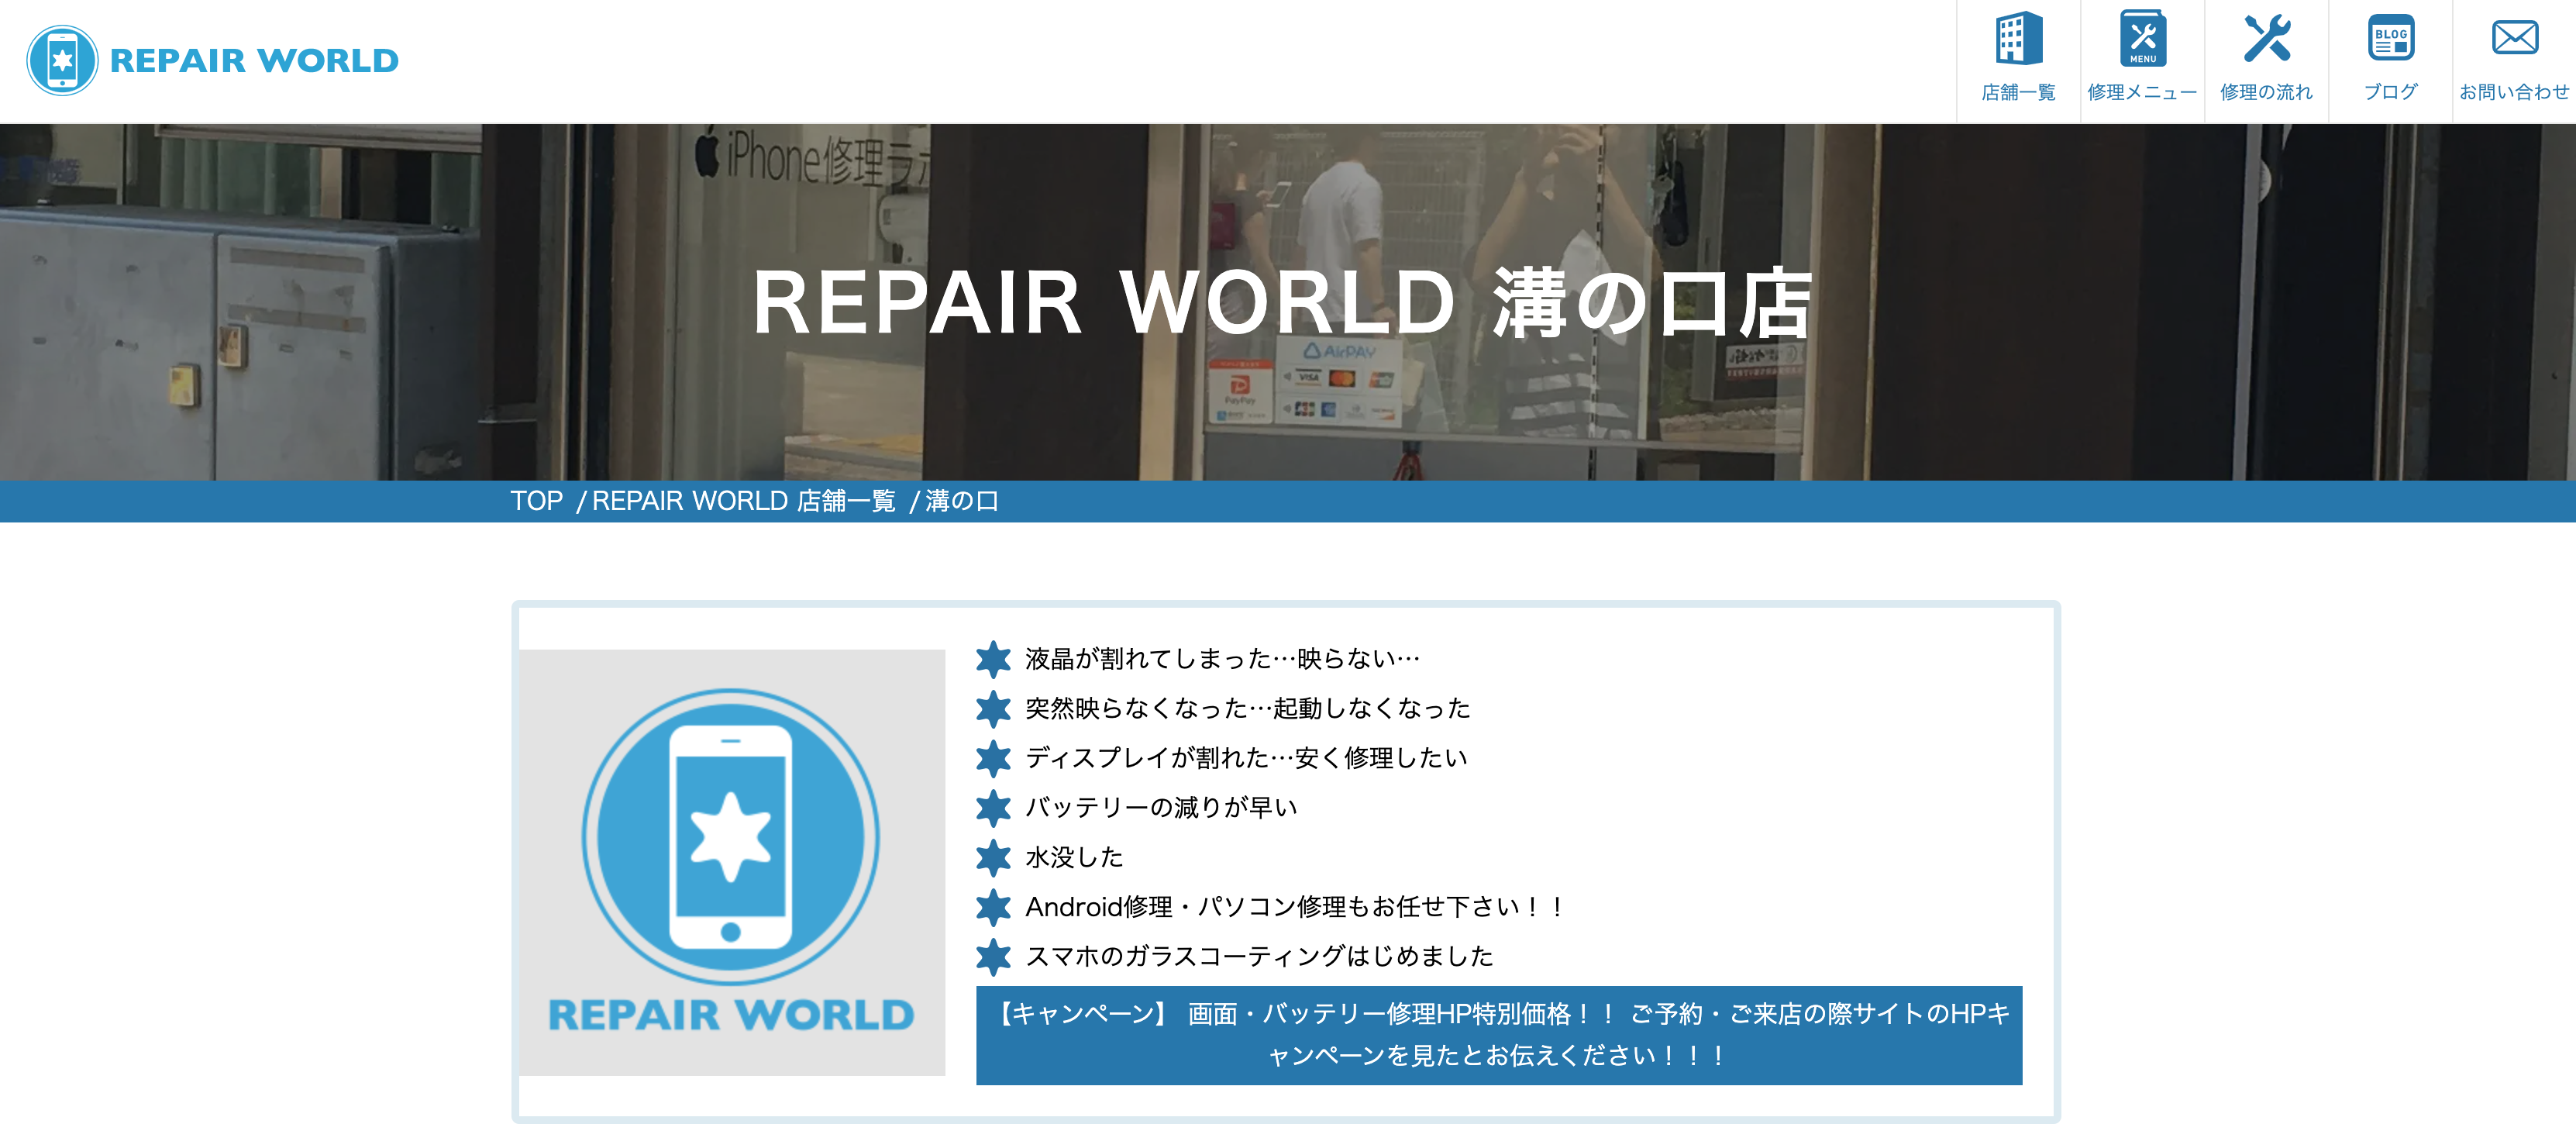 RepairWorld 溝の口店